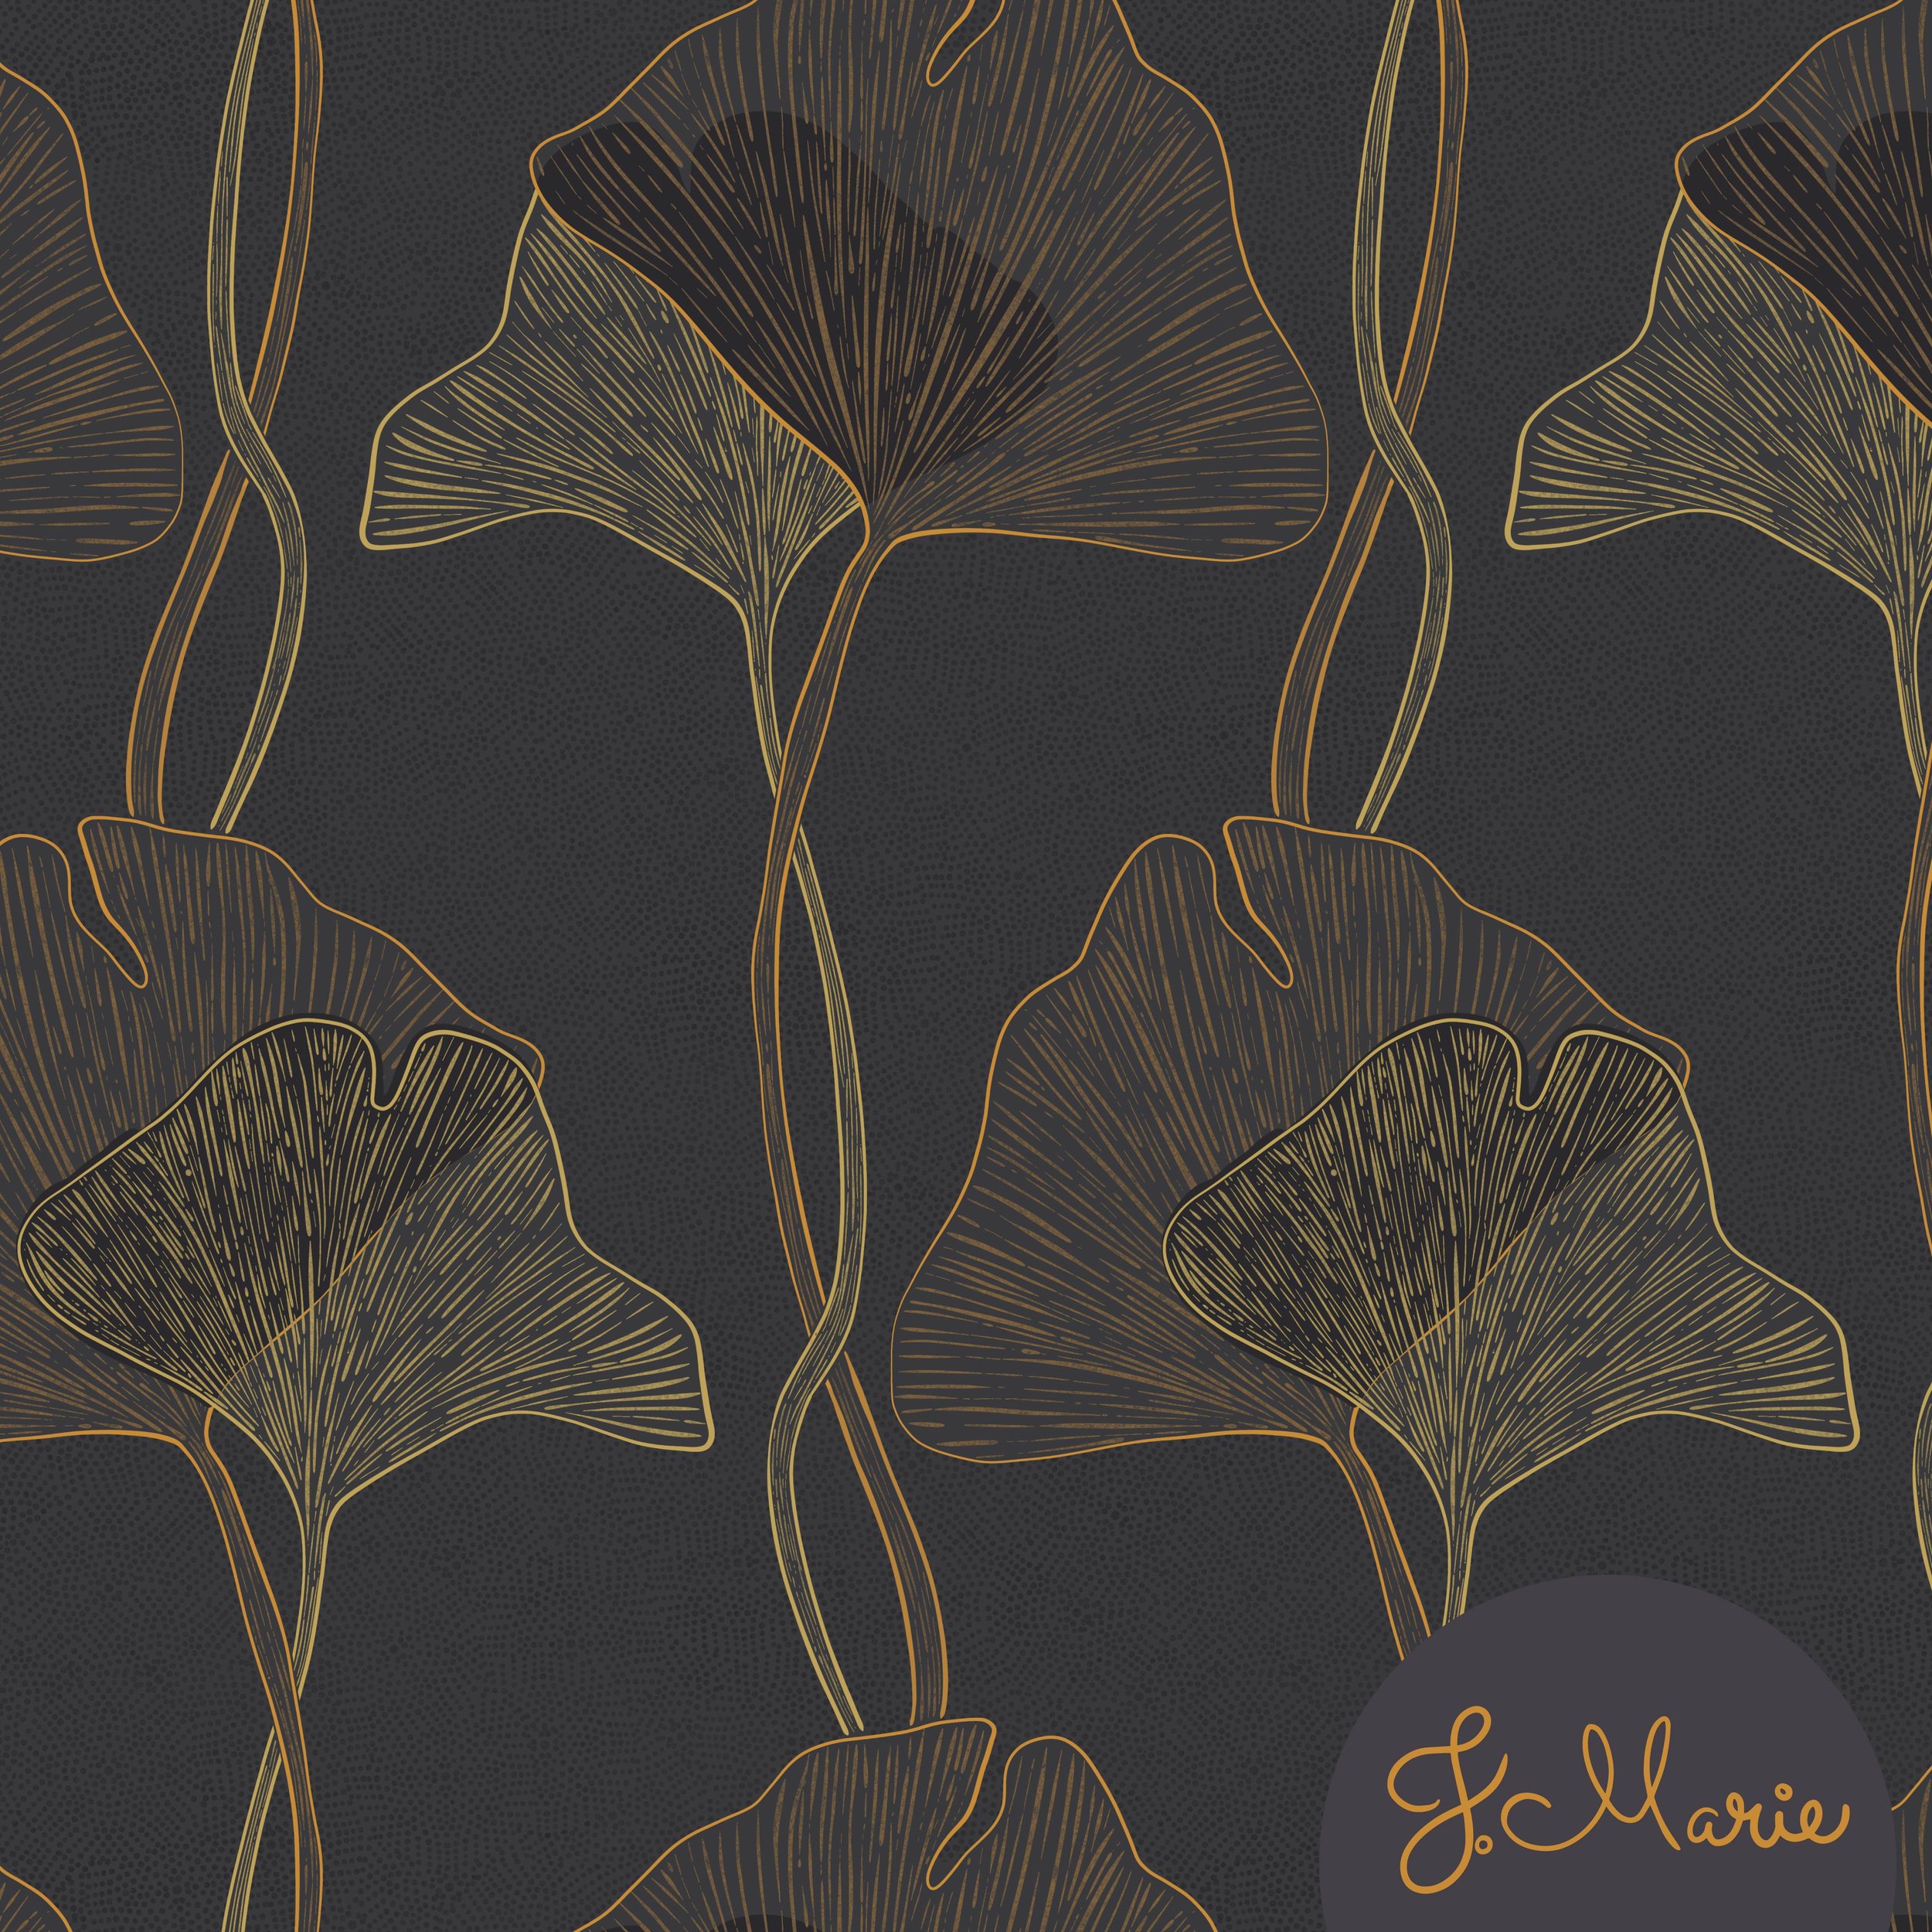 Ginkgo Leaves-01.jpg